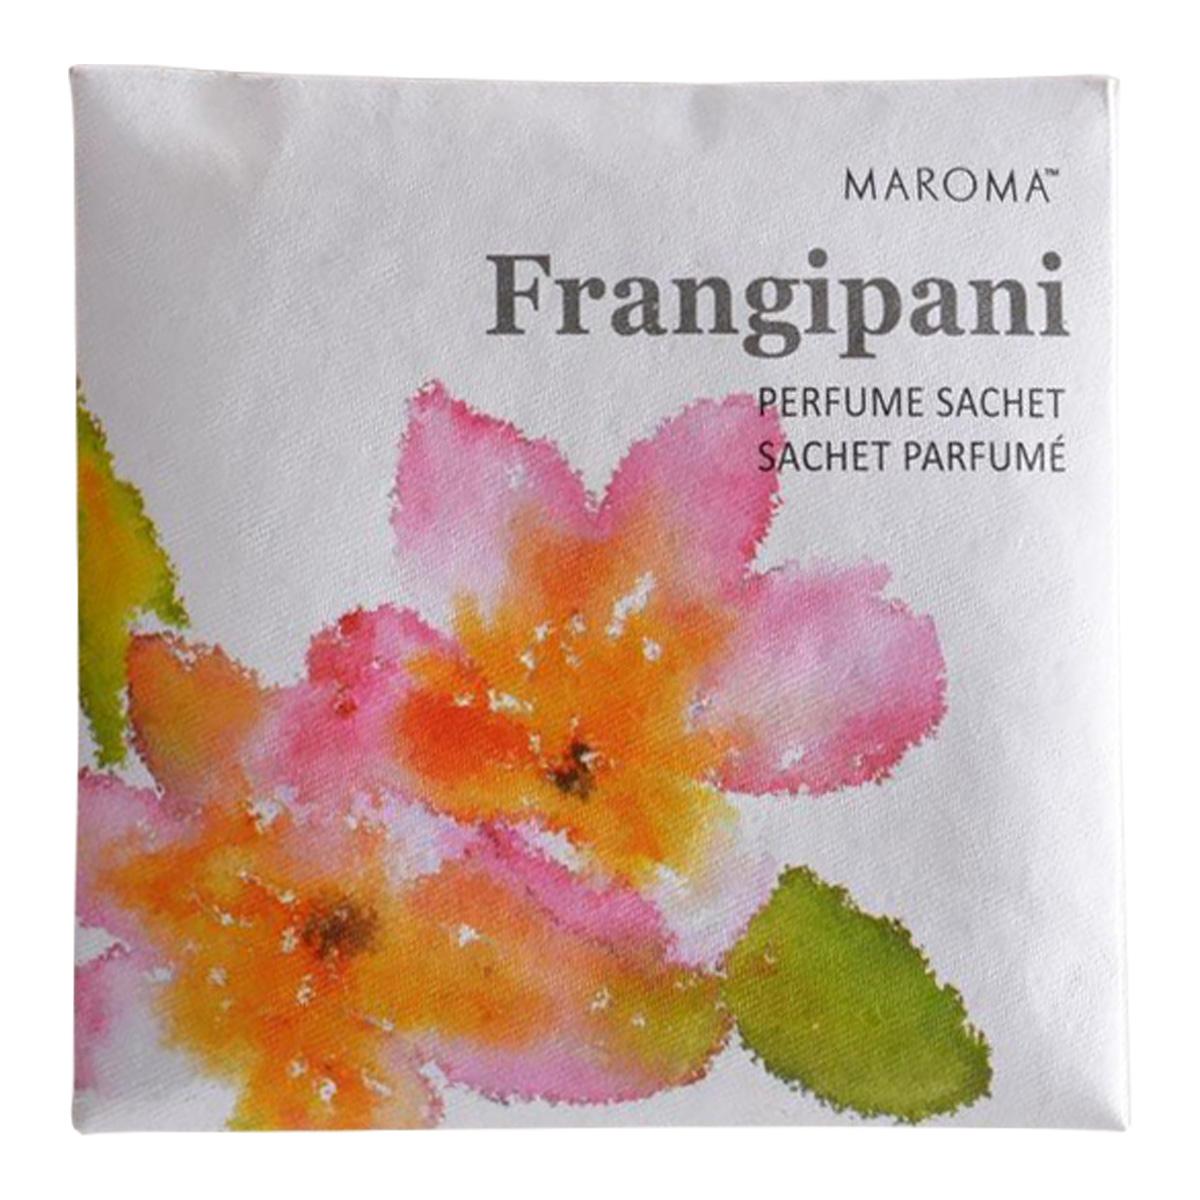 Primary image of Flower Sachet - Frangipani